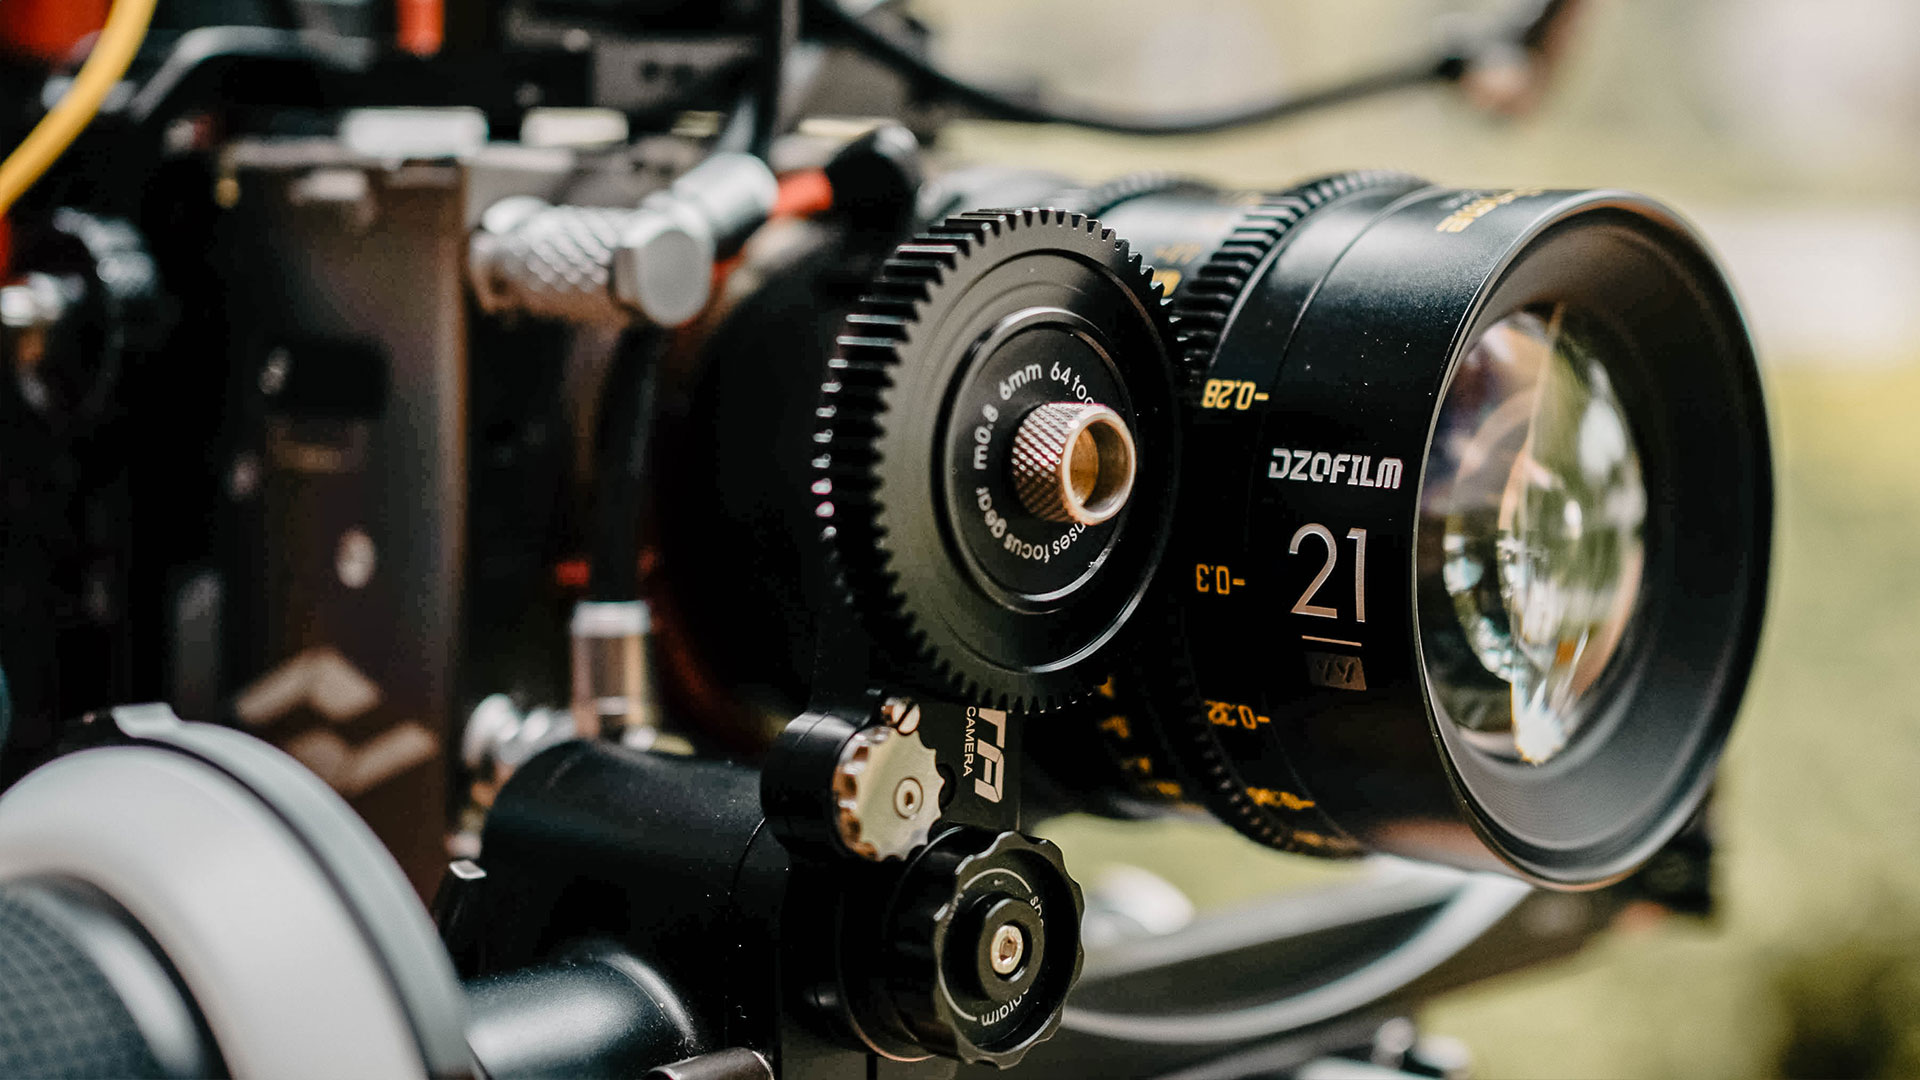 DZOFILMがVespid 21mmと40mm T2.1シネマプライムレンズを発表 | CineD